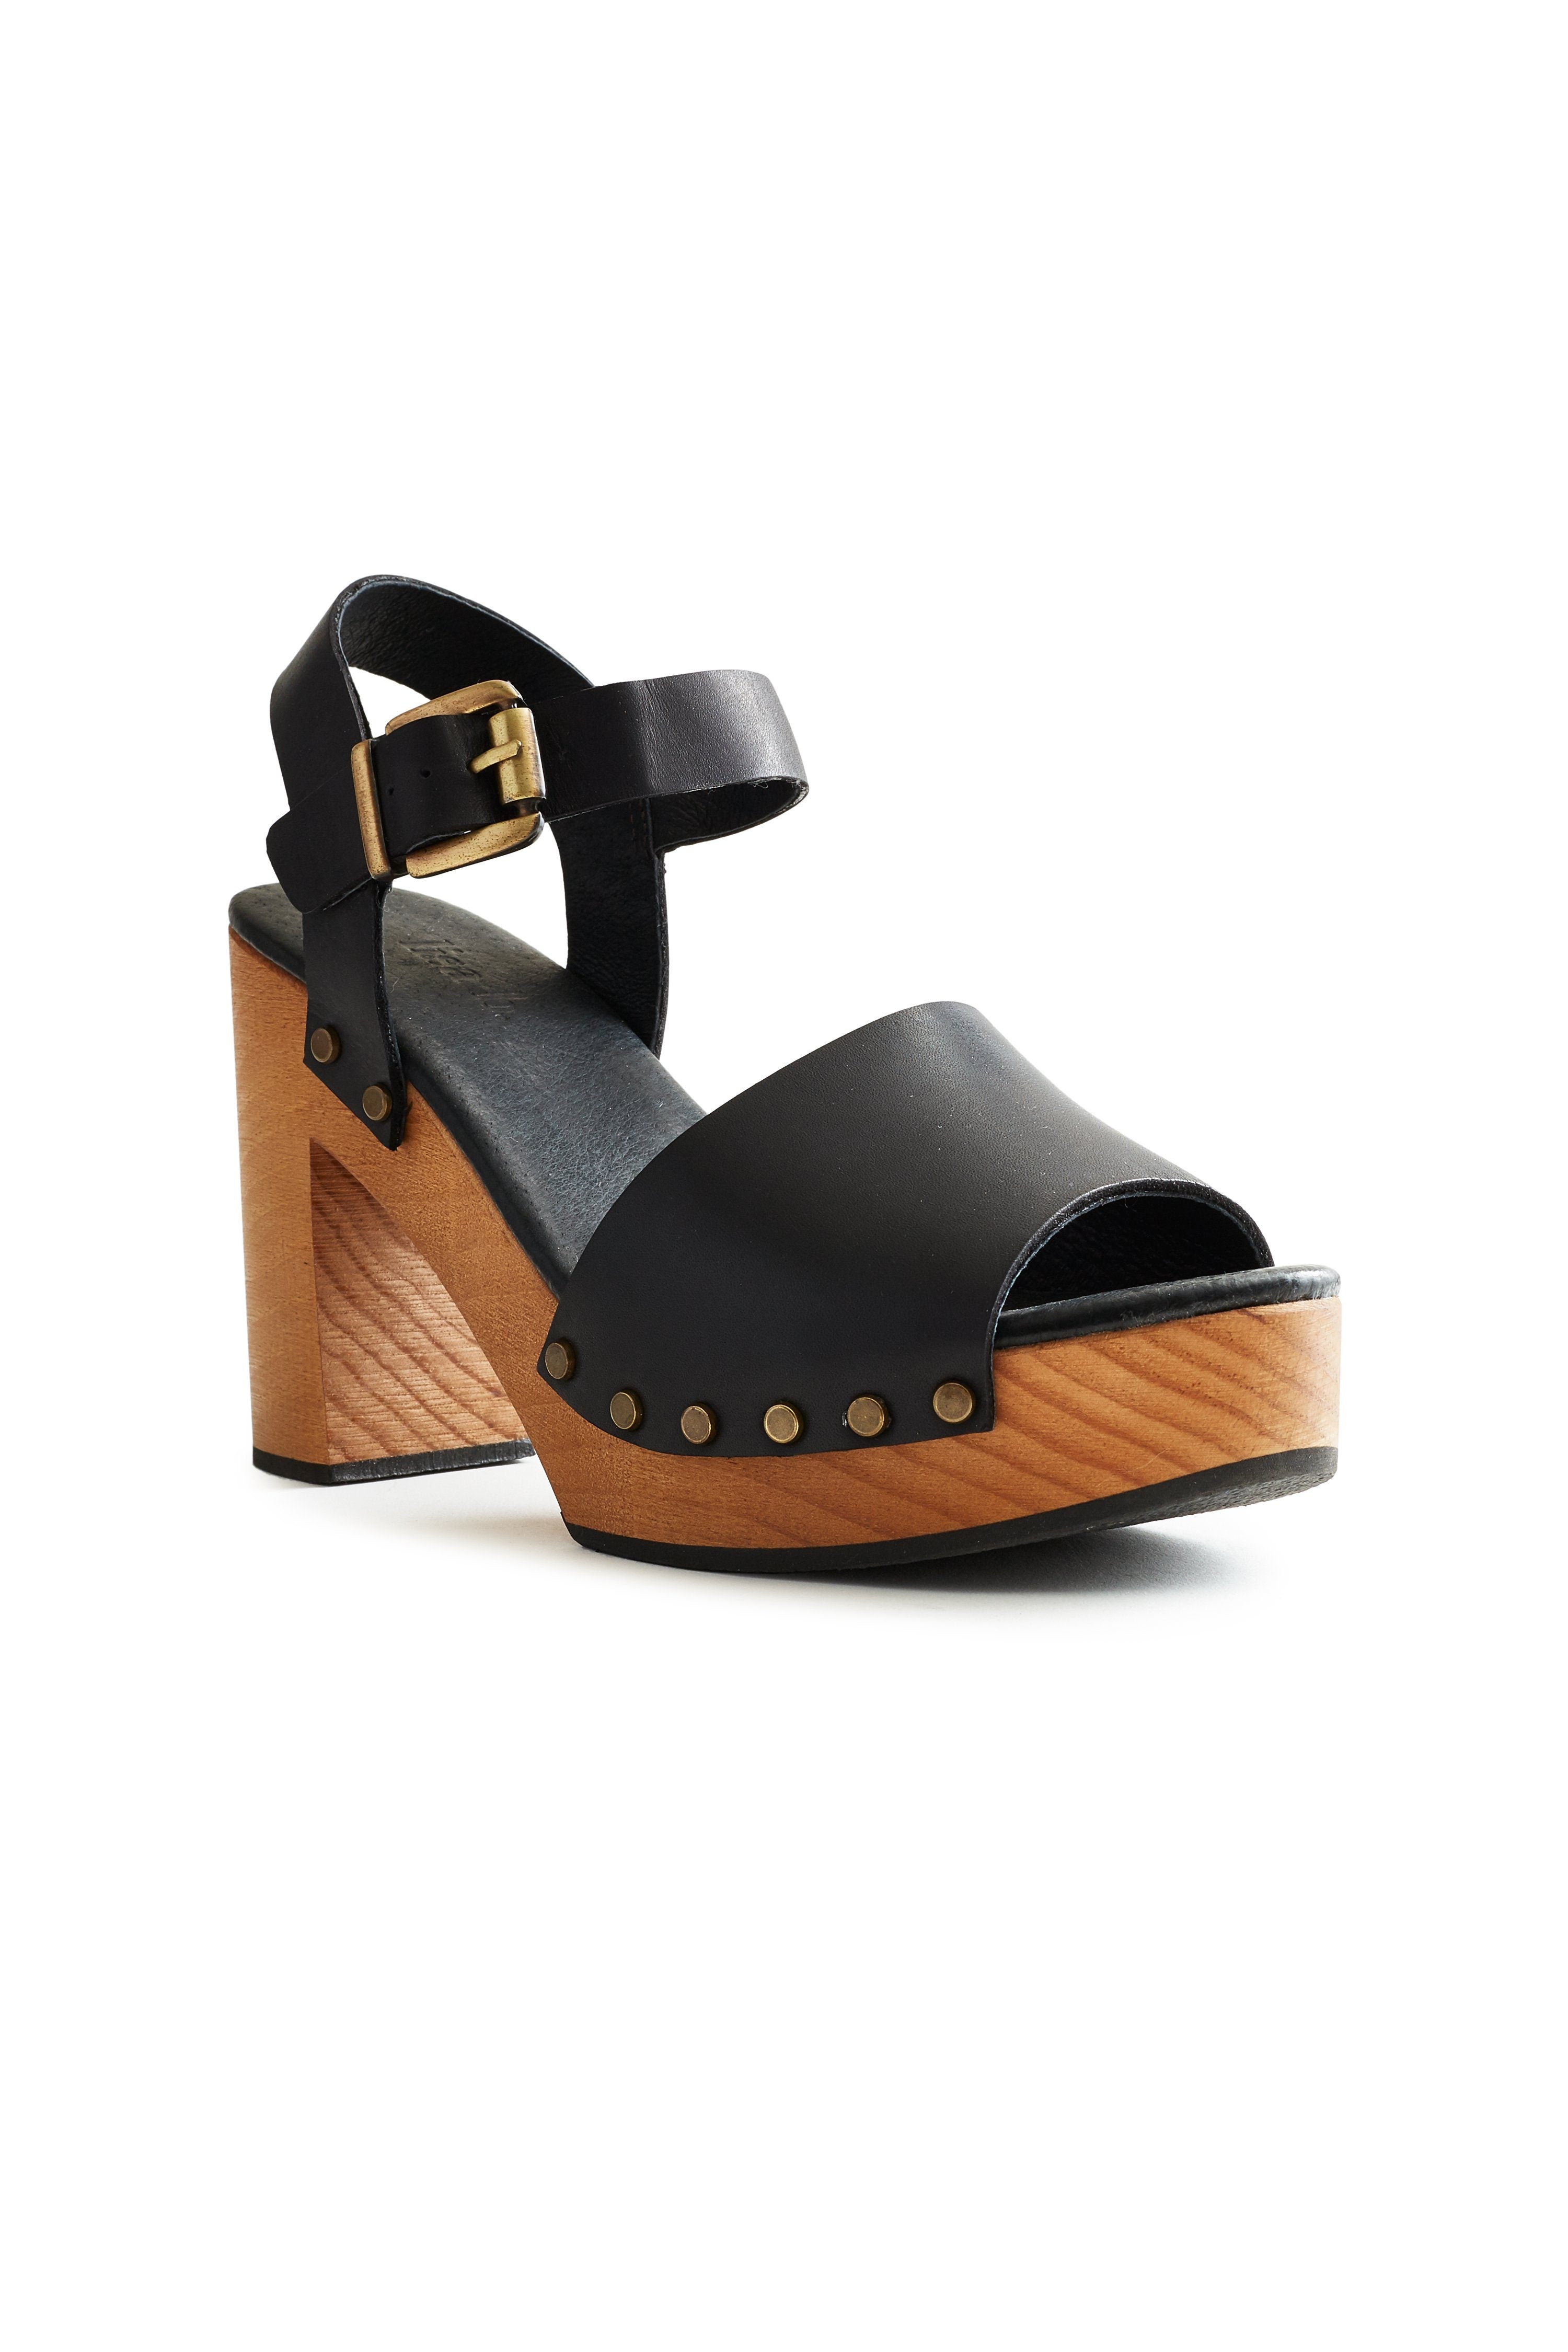 Wooden clogs | Orange leather clogs with 9 cm heel | GIOIE ITALIANE